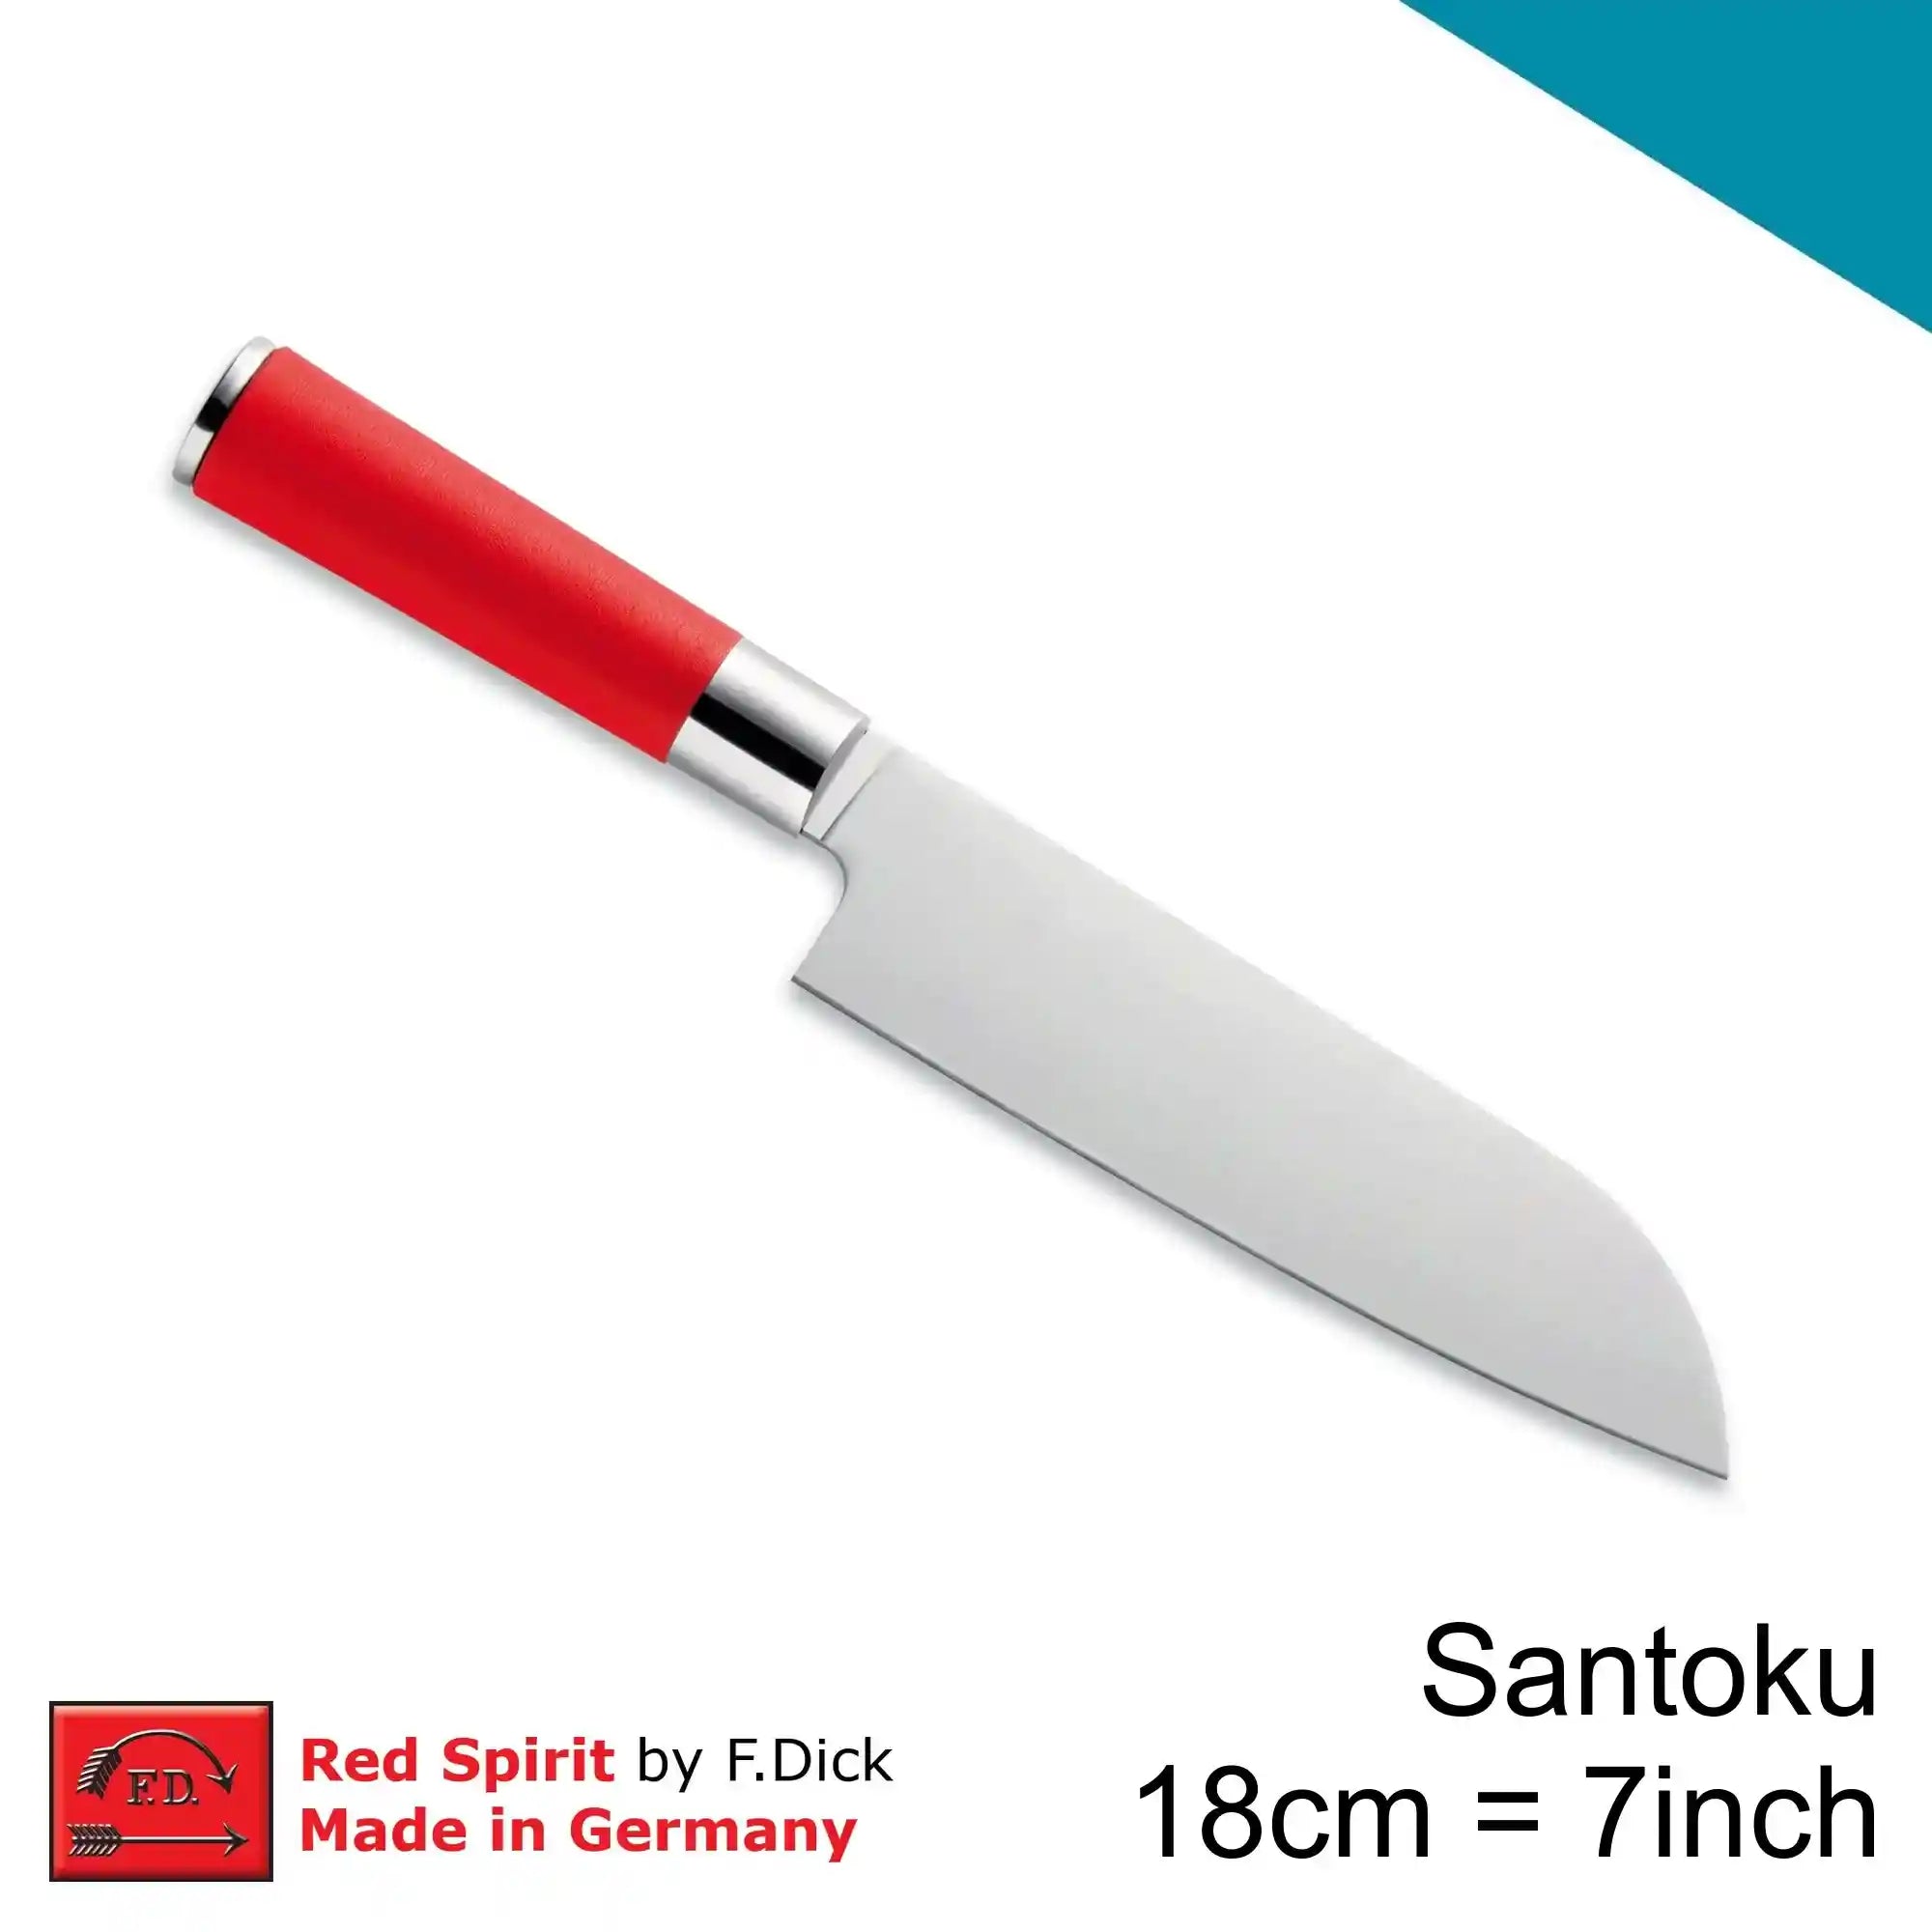 F.Dick Red Spirit Santoku, 18cm